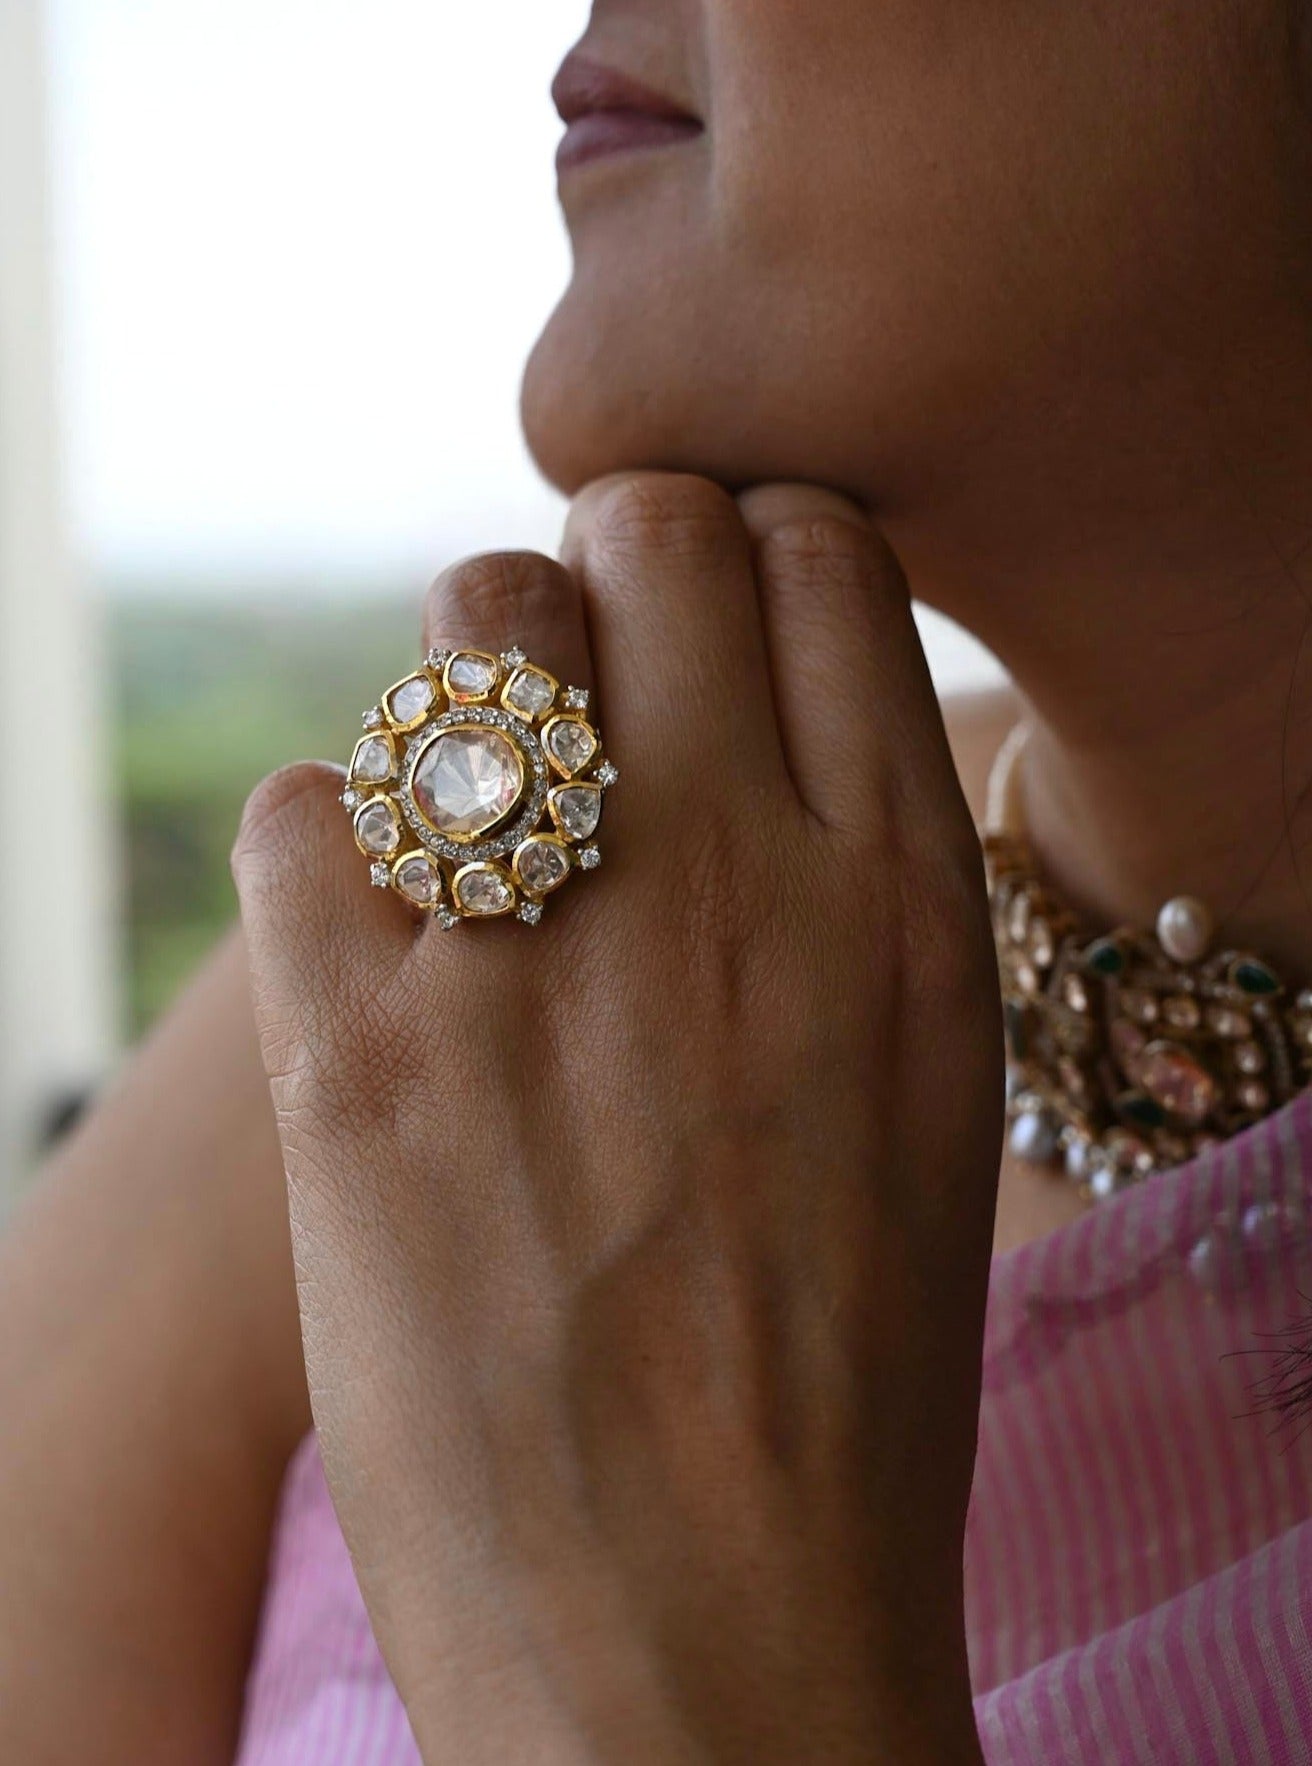 8 Carat Prong Huge Engagement Ring – shine of diamond